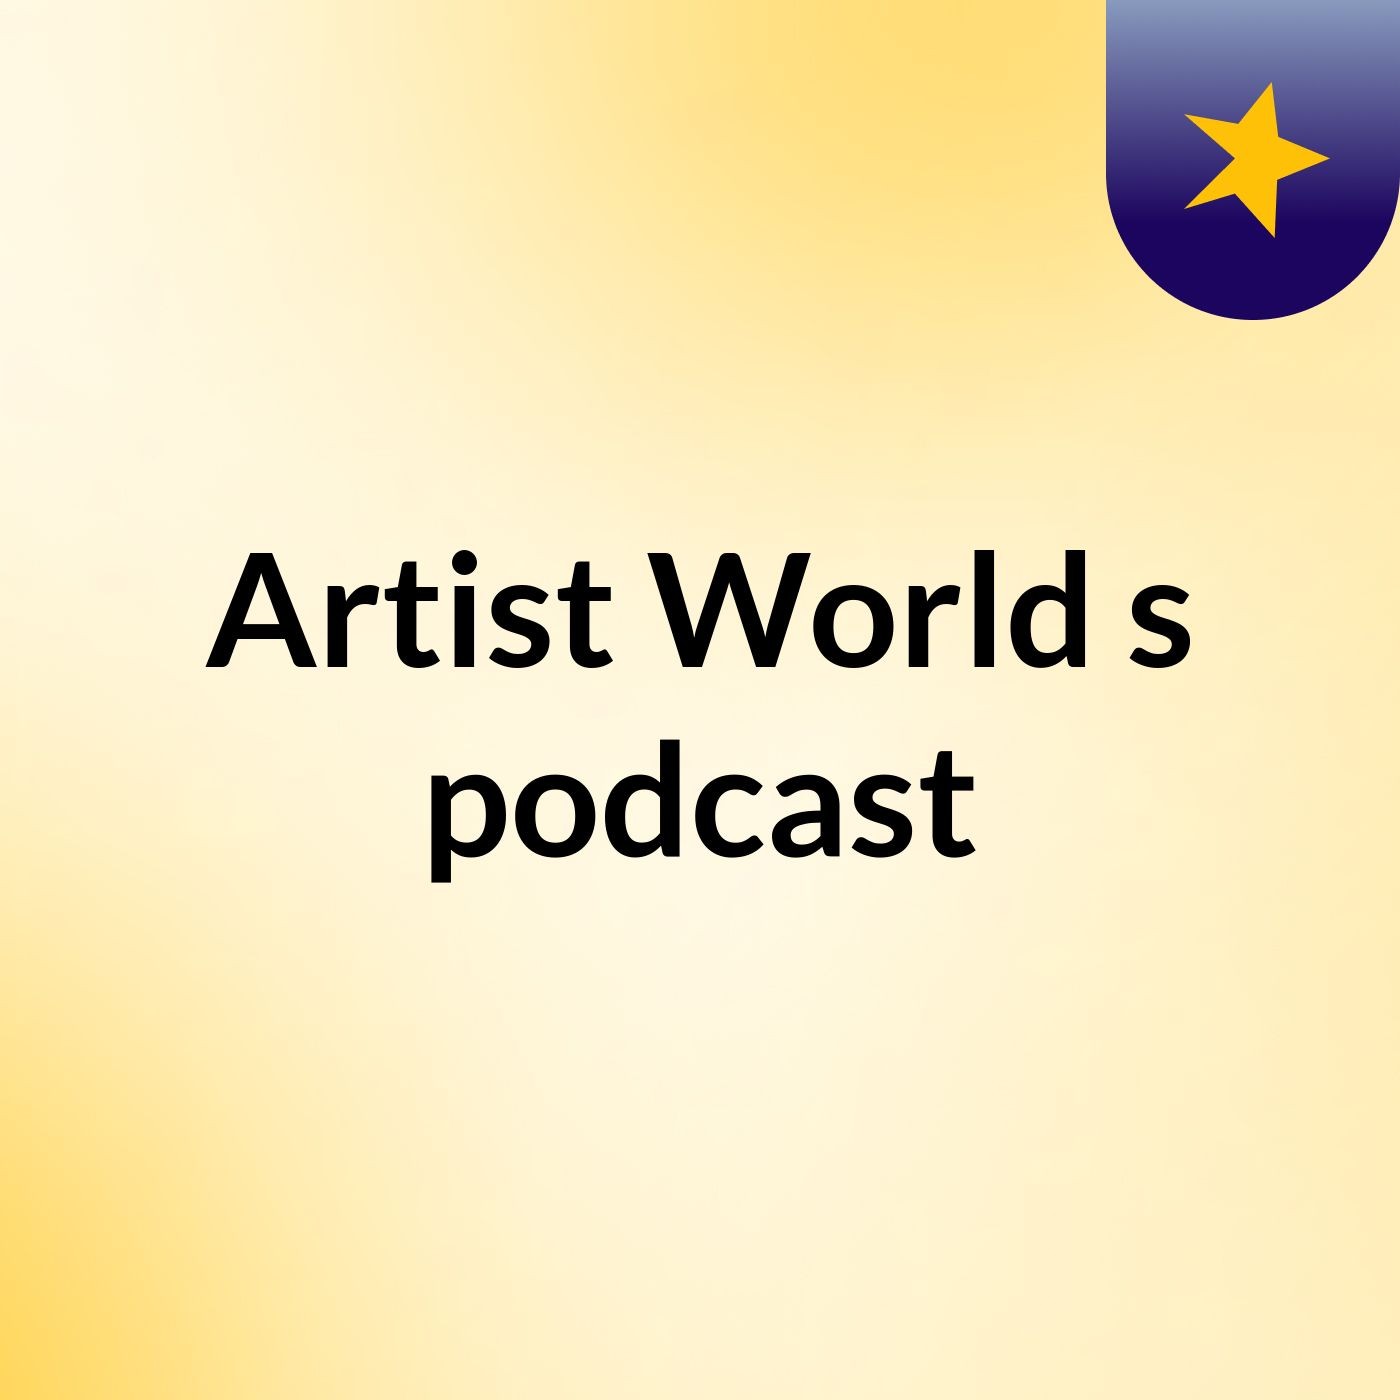 Artist World's podcast